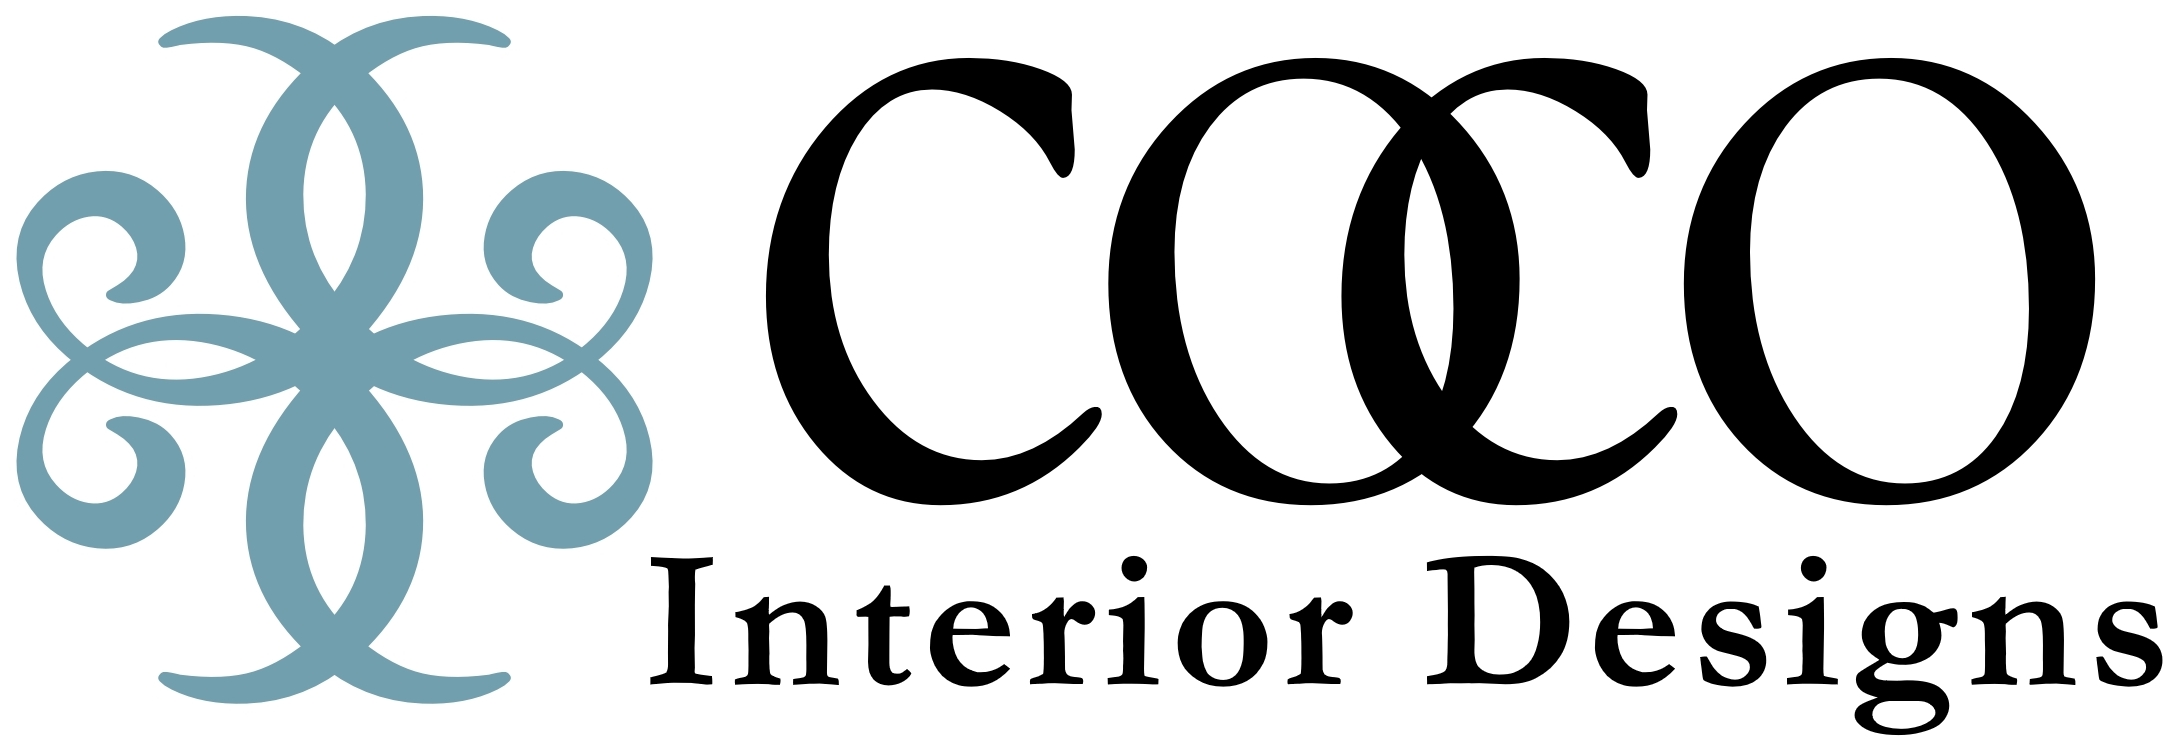 CoCo Interior Designs